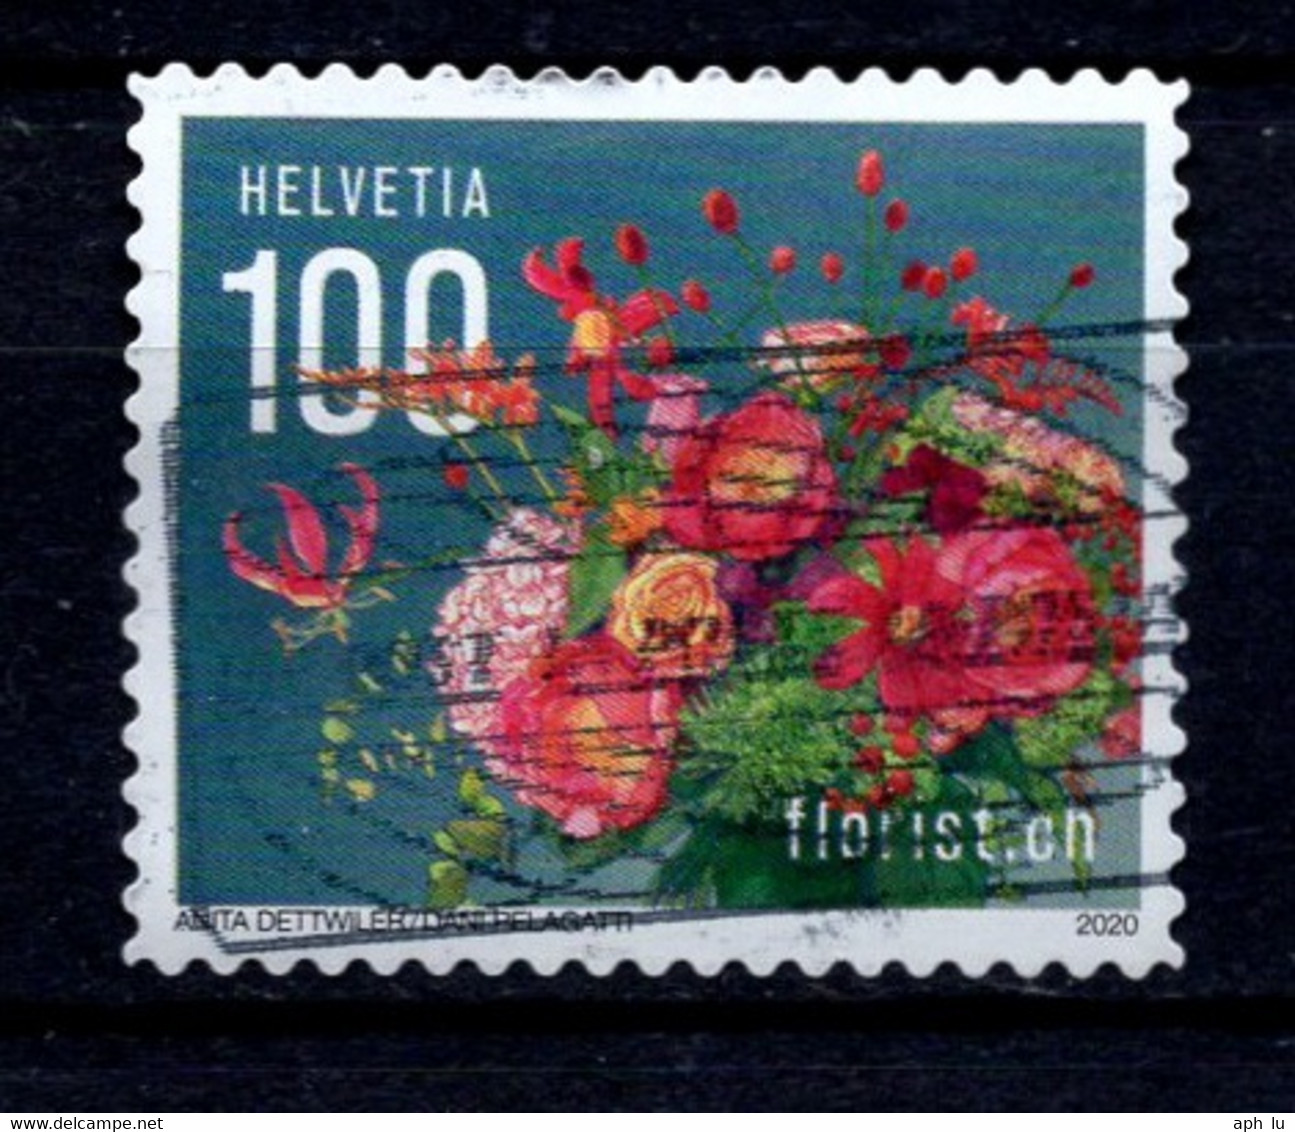 Marke Aus Dem Jahre 2020 (b410602) - Used Stamps